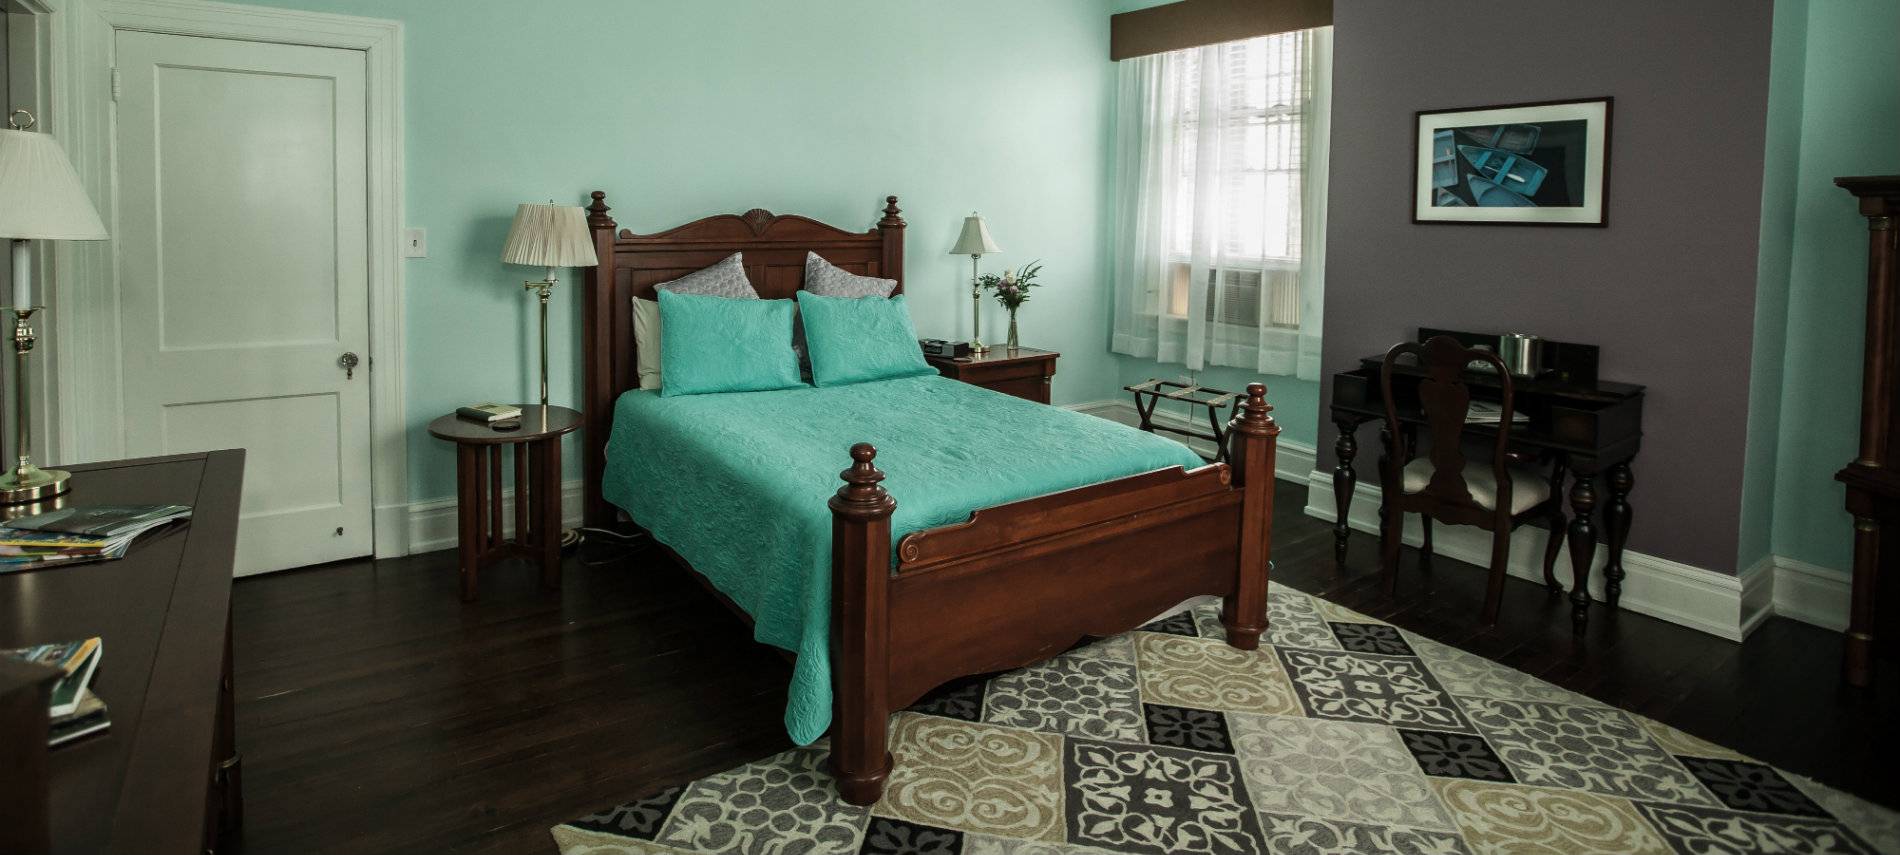 Jasmine Room with a pastel green bedspread